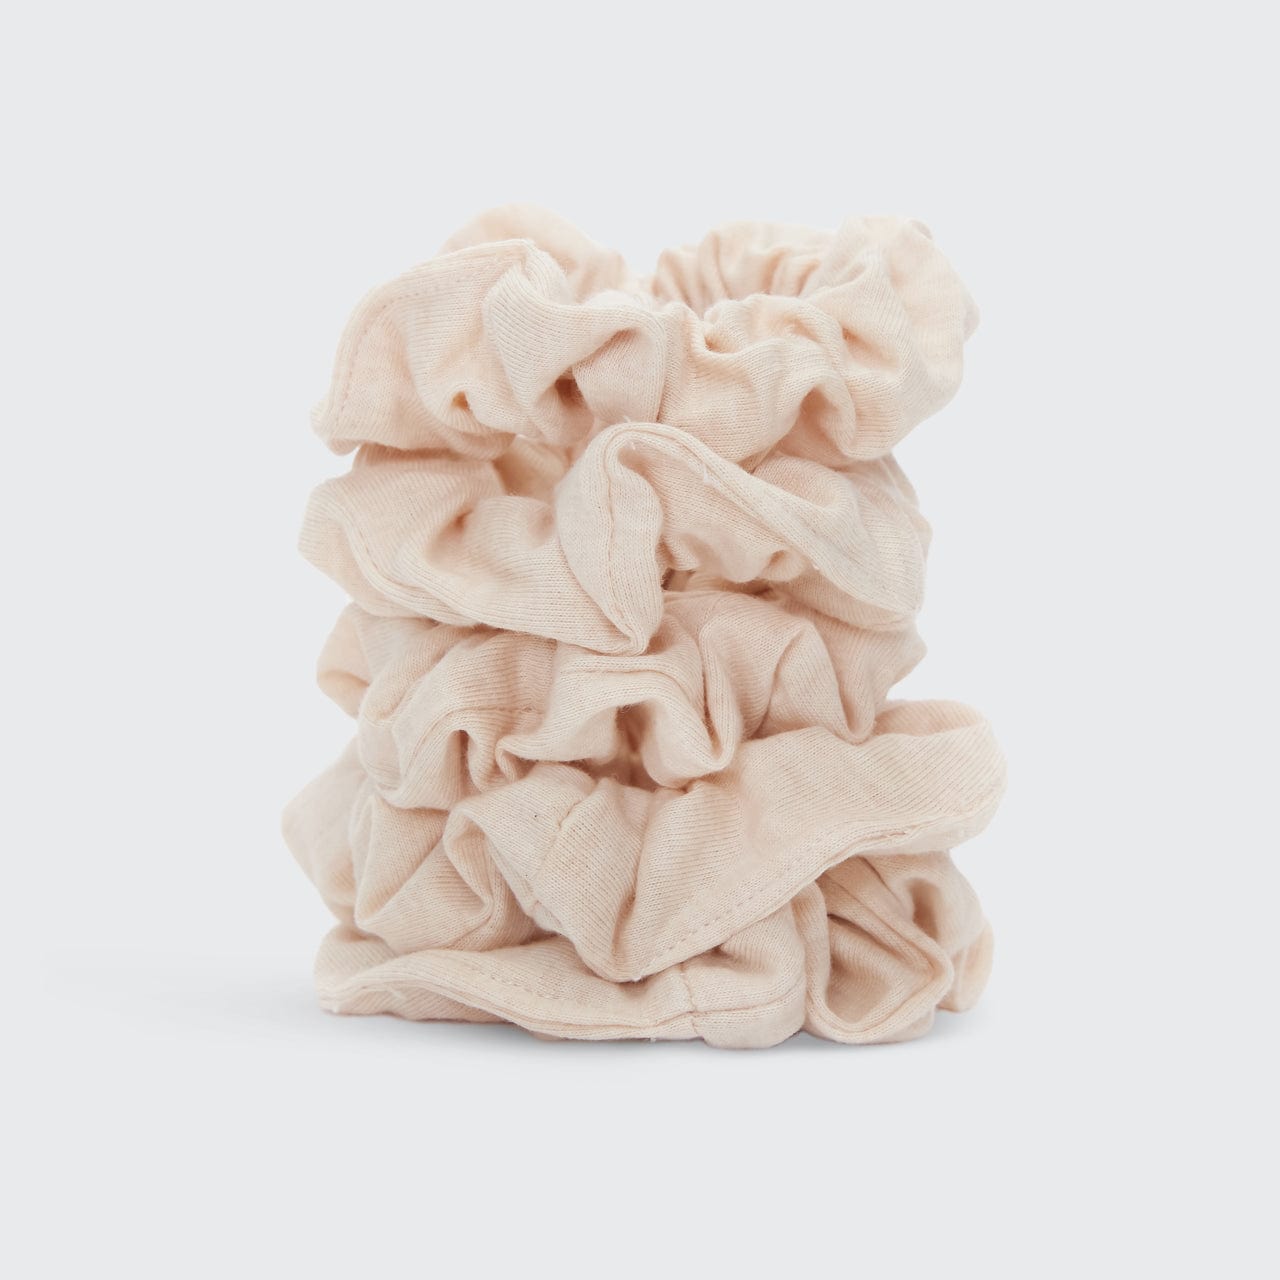 Organic Cotton Knit Scrunchies in Cream - 5pc